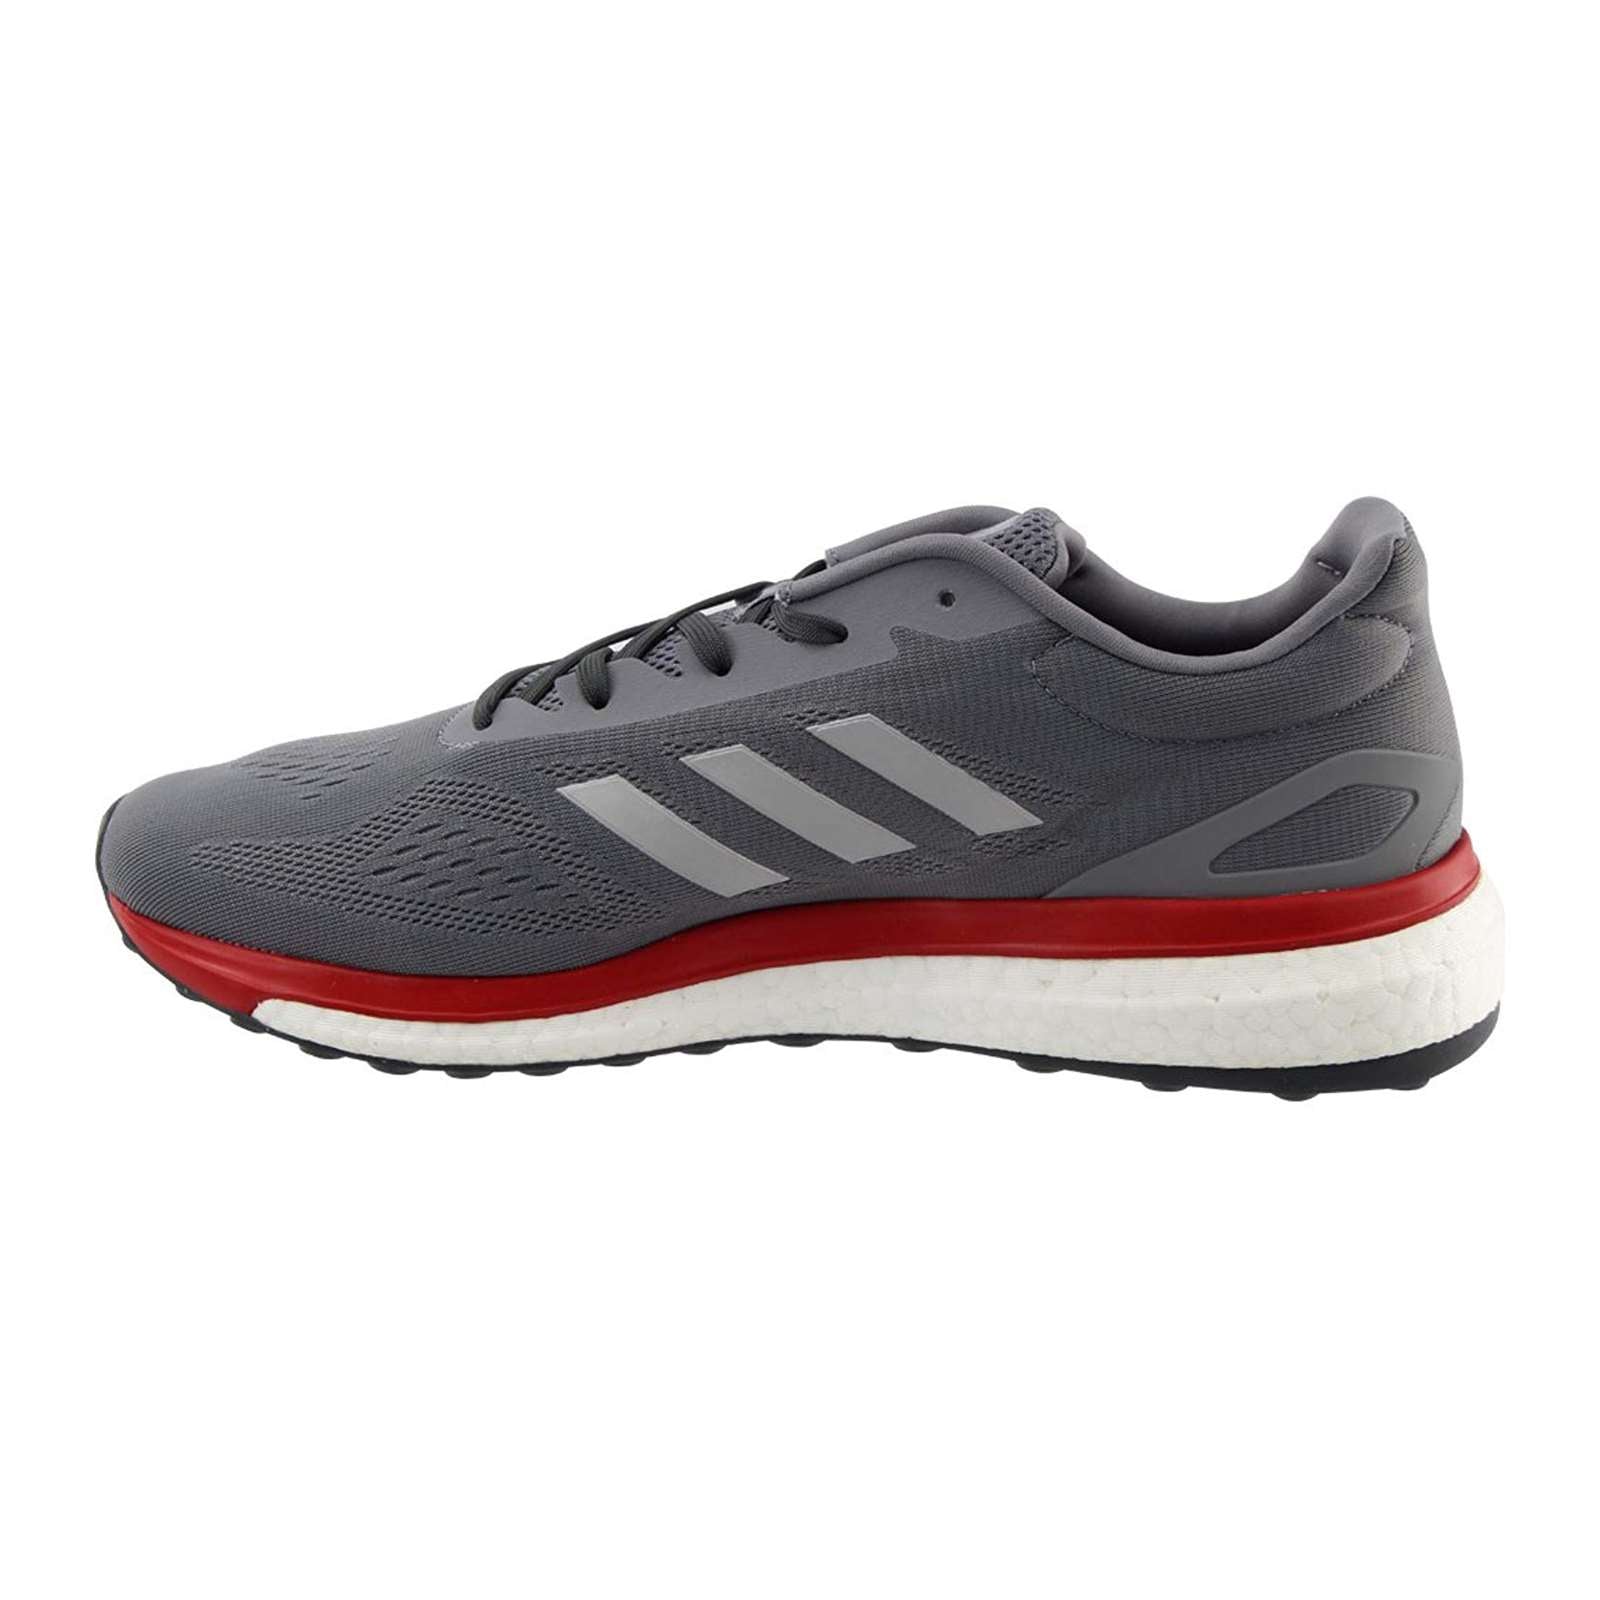 Adidas Men Response Lt Running Shoes